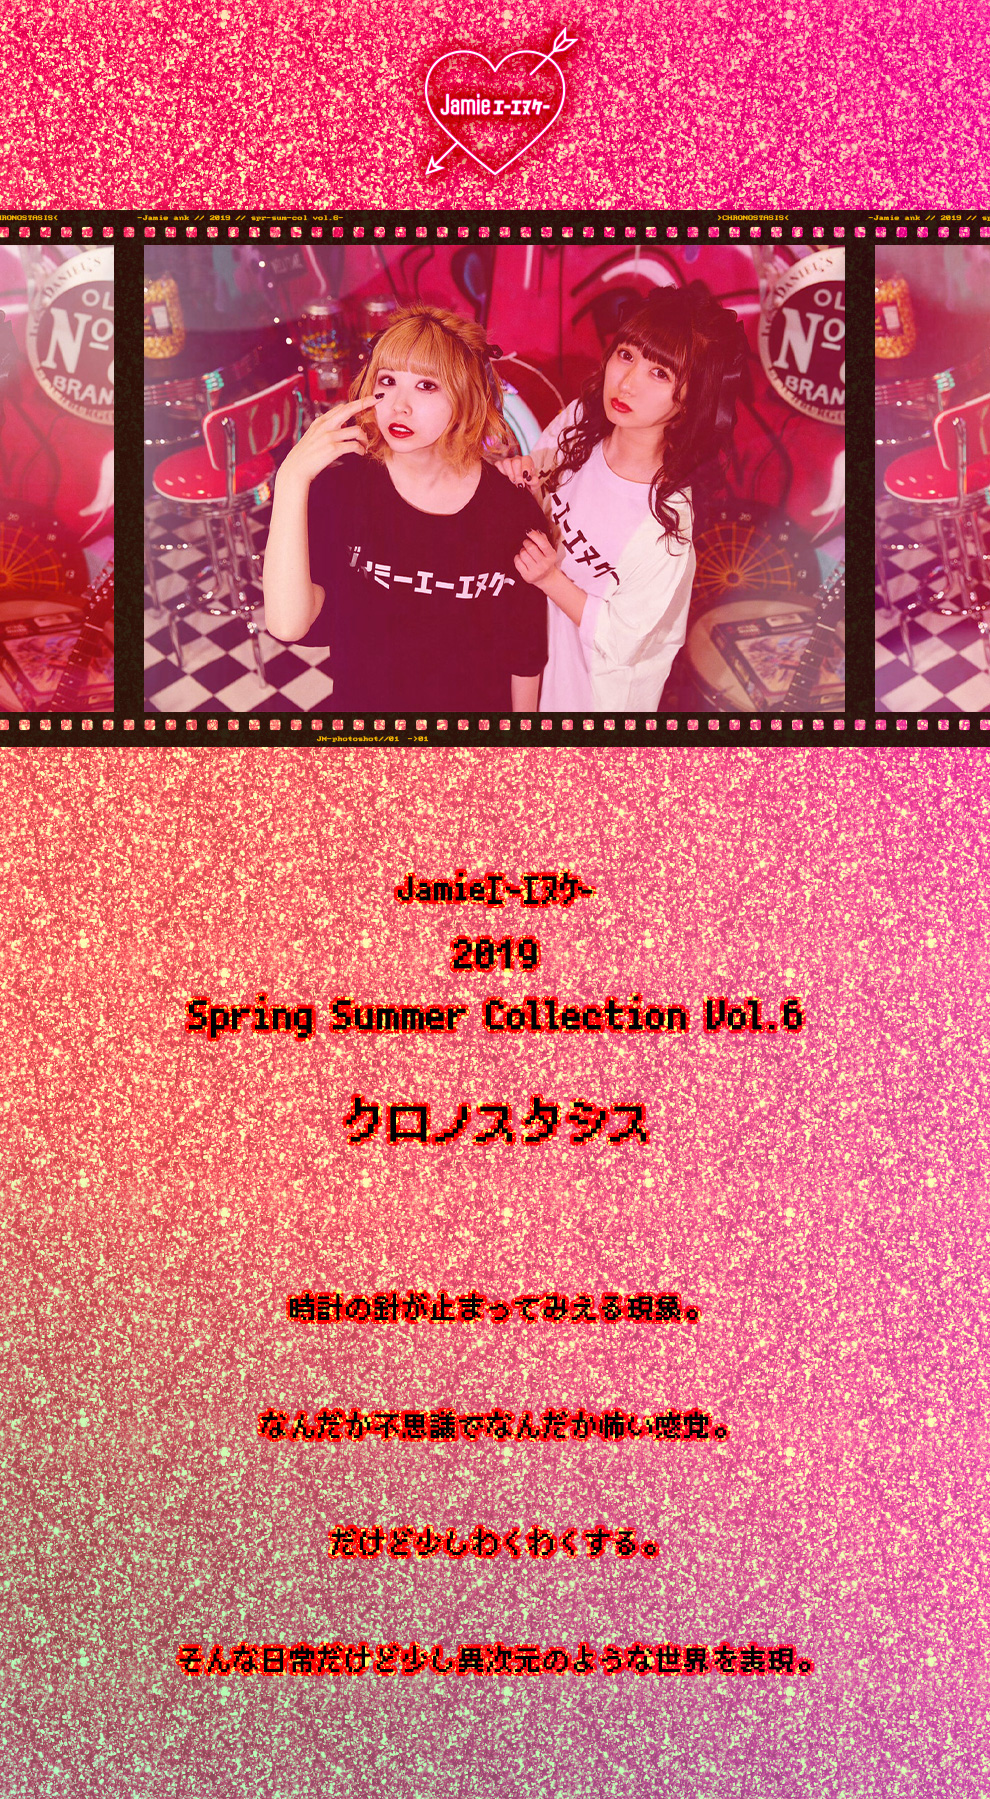 Jamieエーエヌケー 2019 Spring Summer Collection Vol.6「クロノスタシス」